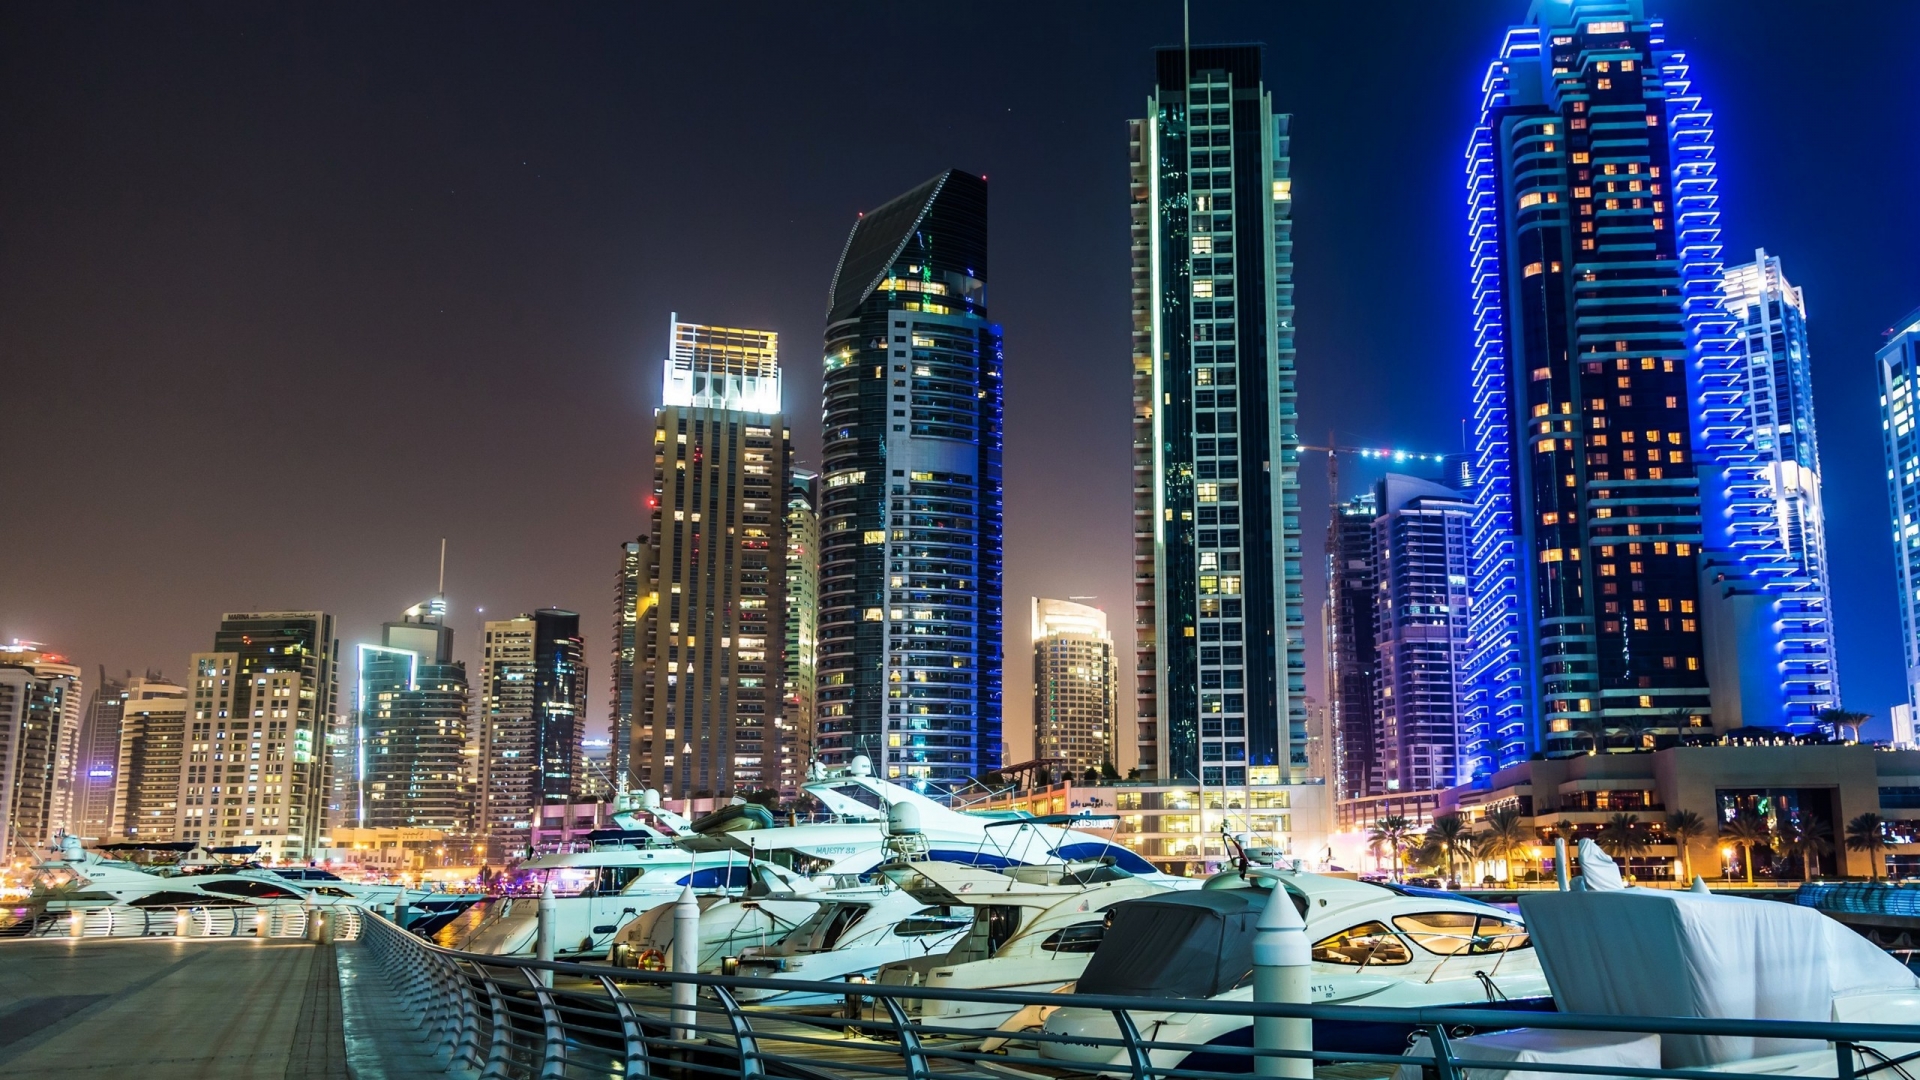 Dubai Marina View for 1920 x 1080 HDTV 1080p resolution